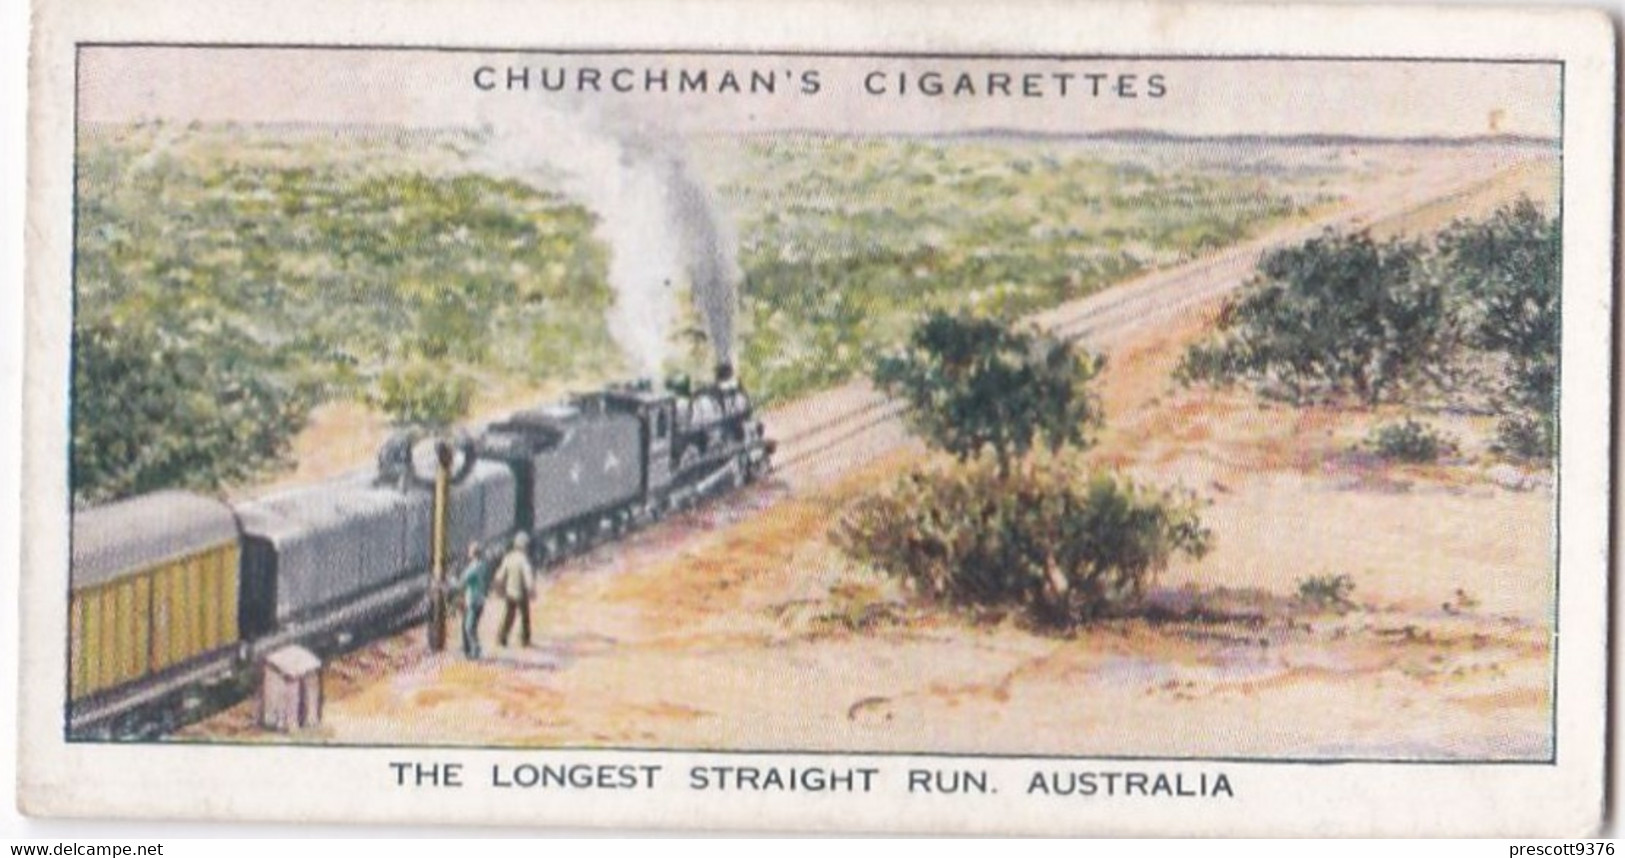 Wonderful Railway Travel, 1937 - 7 Longest Straight Run, Australia   - Churchman Cigarette Card - Trains - Churchman